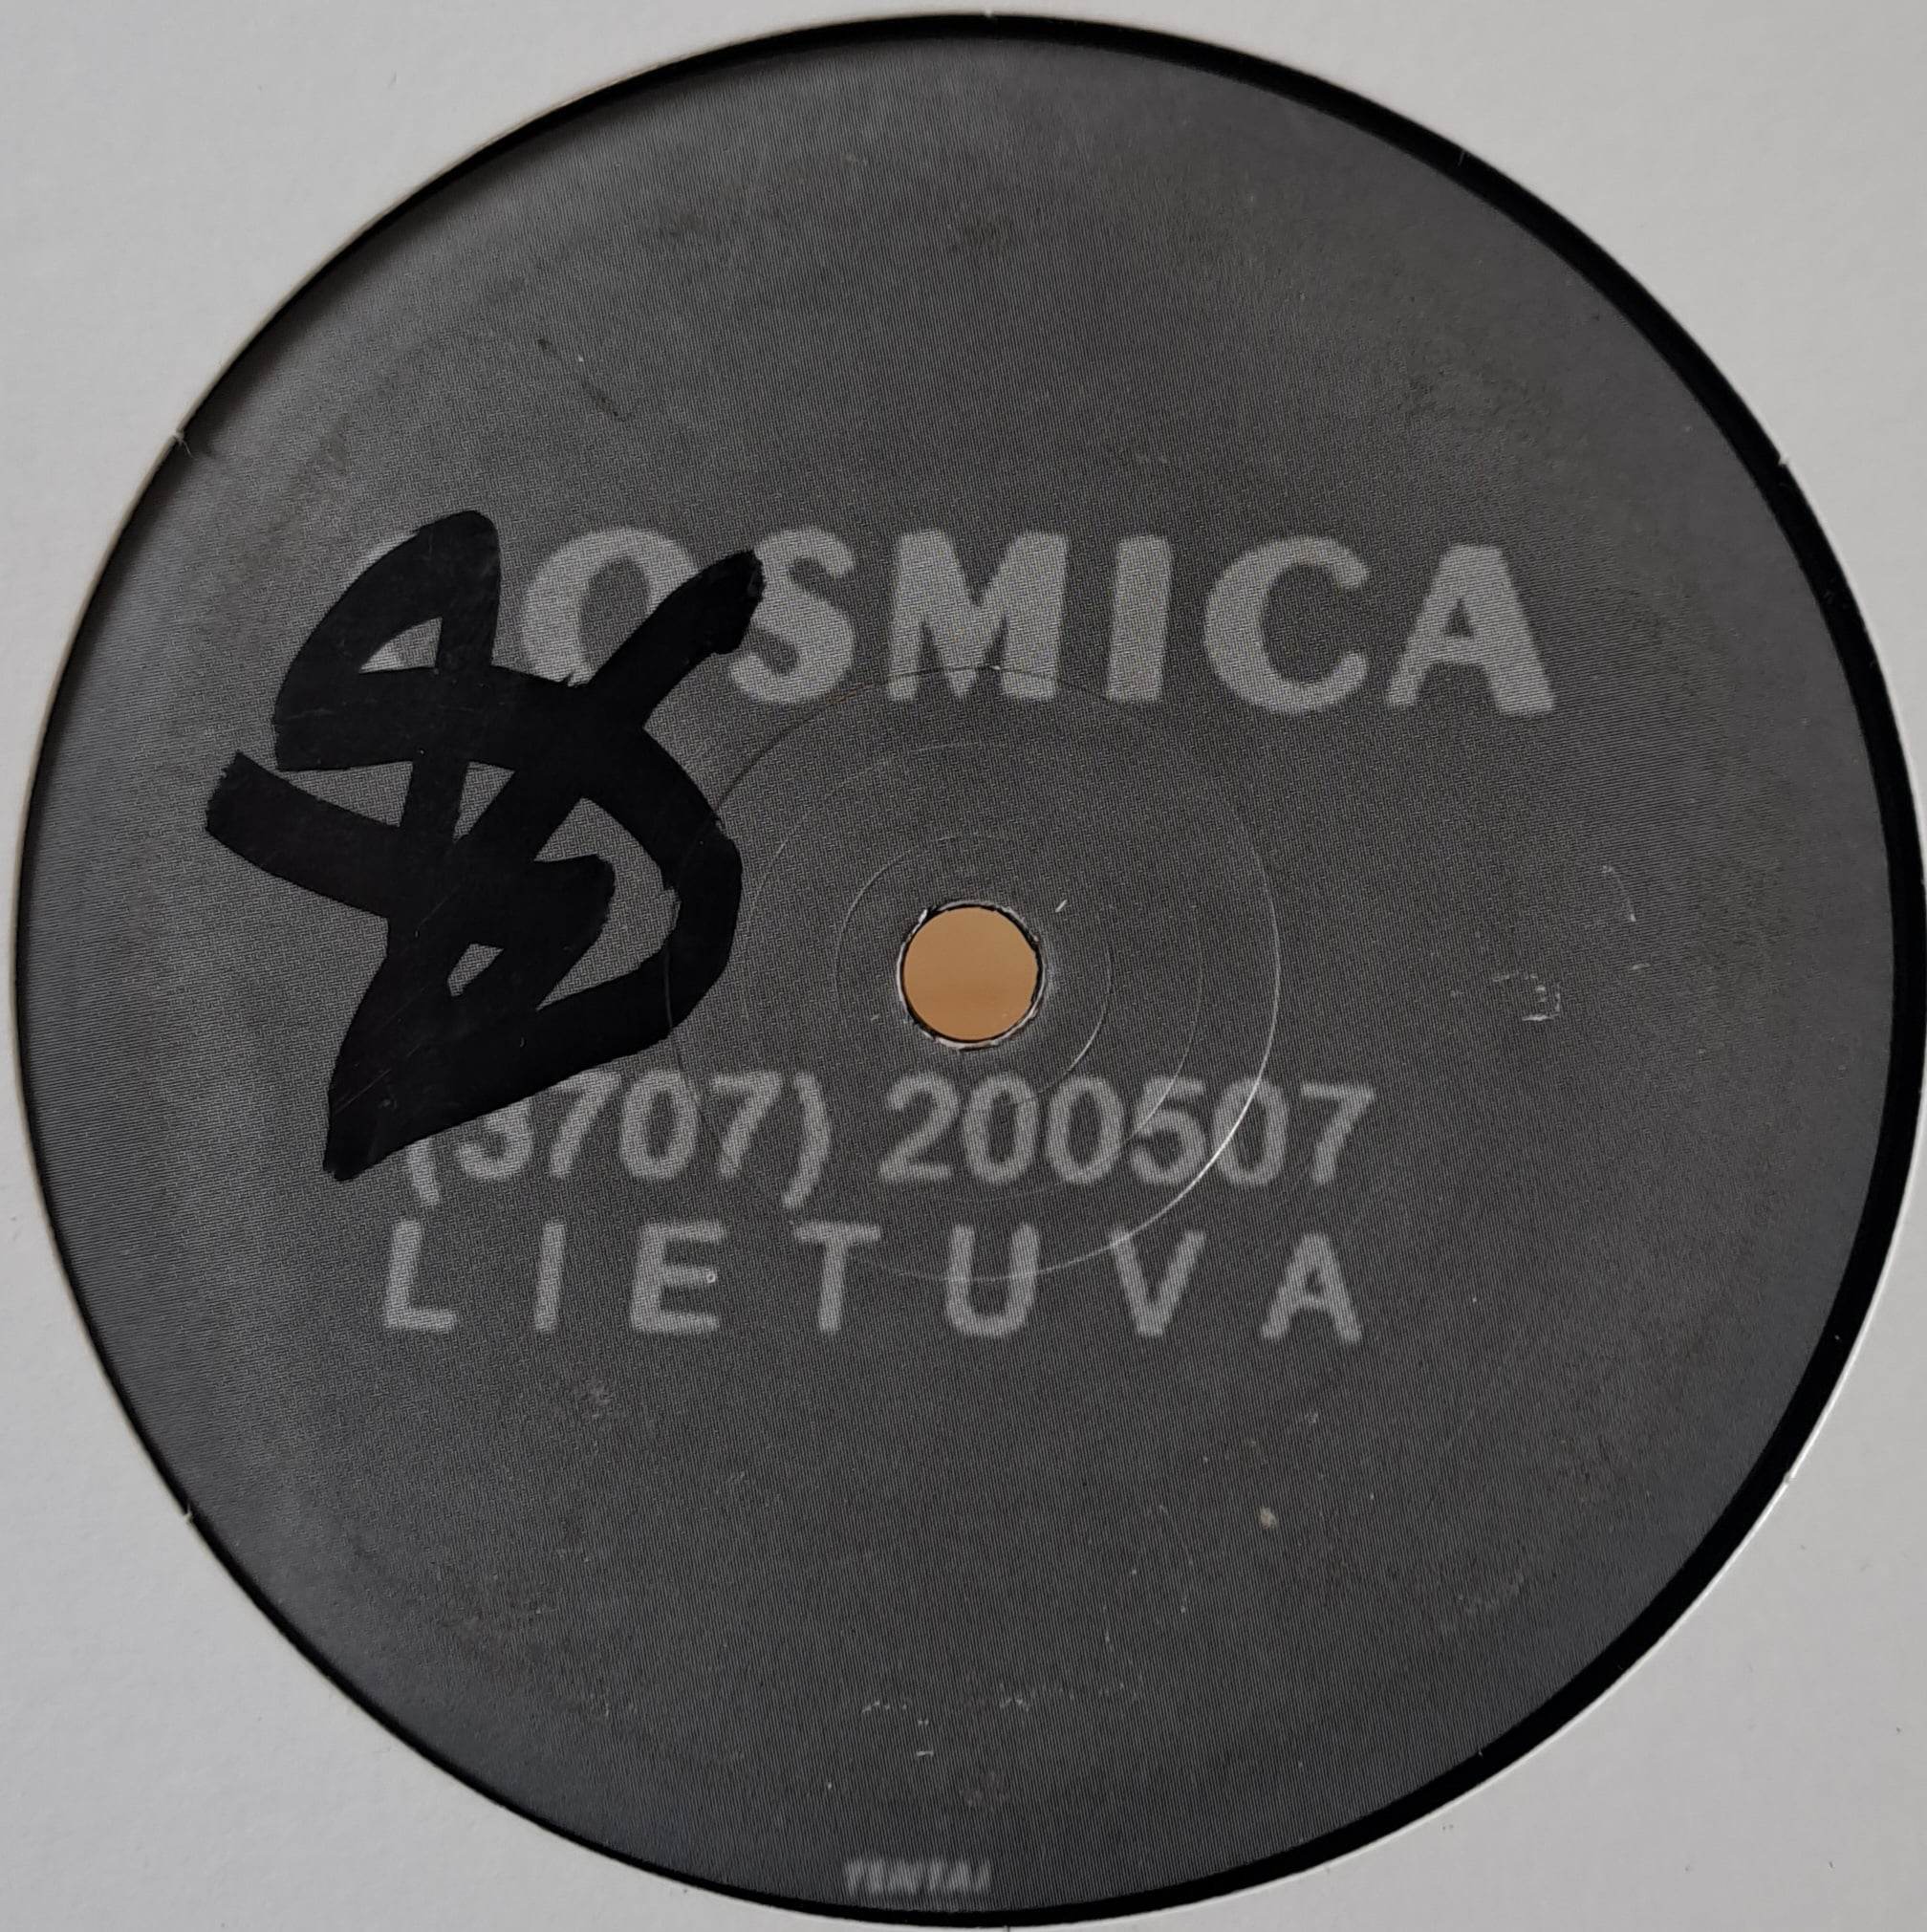 Cosmica 001 - vinyle abstrait